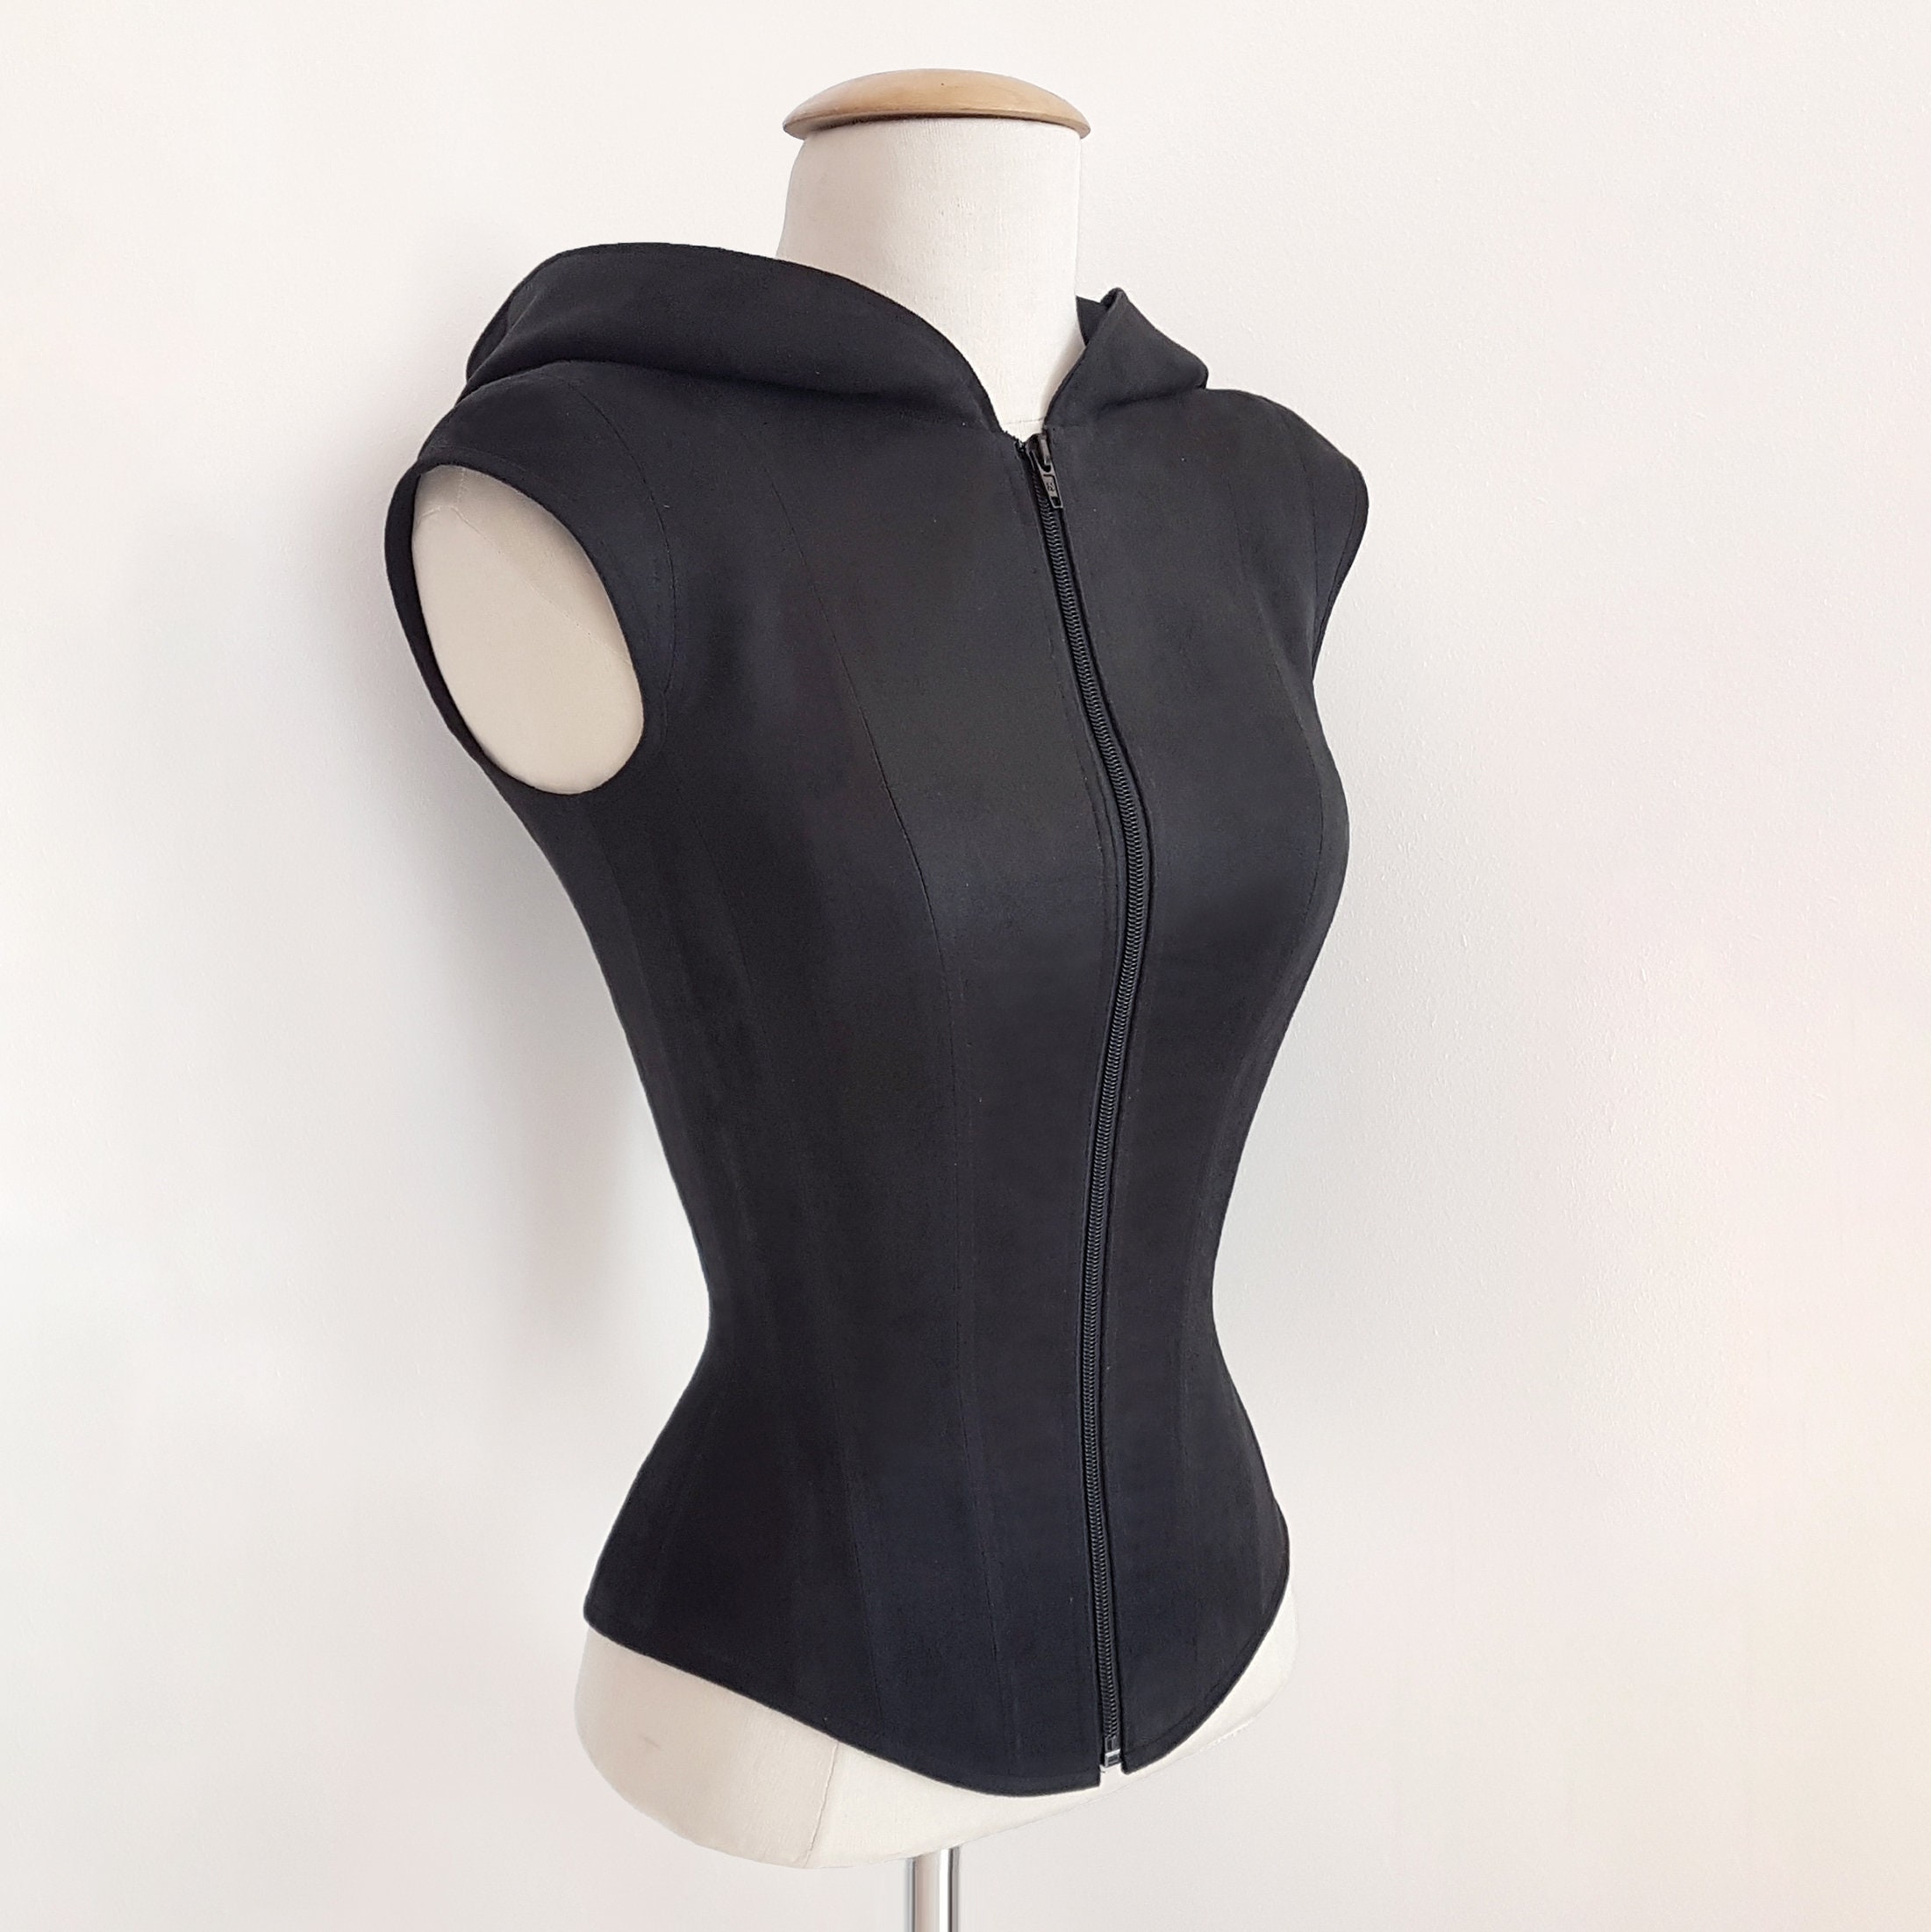 Buy Tutorial Bundle: Bespoke Corset Vests by Royal Black English